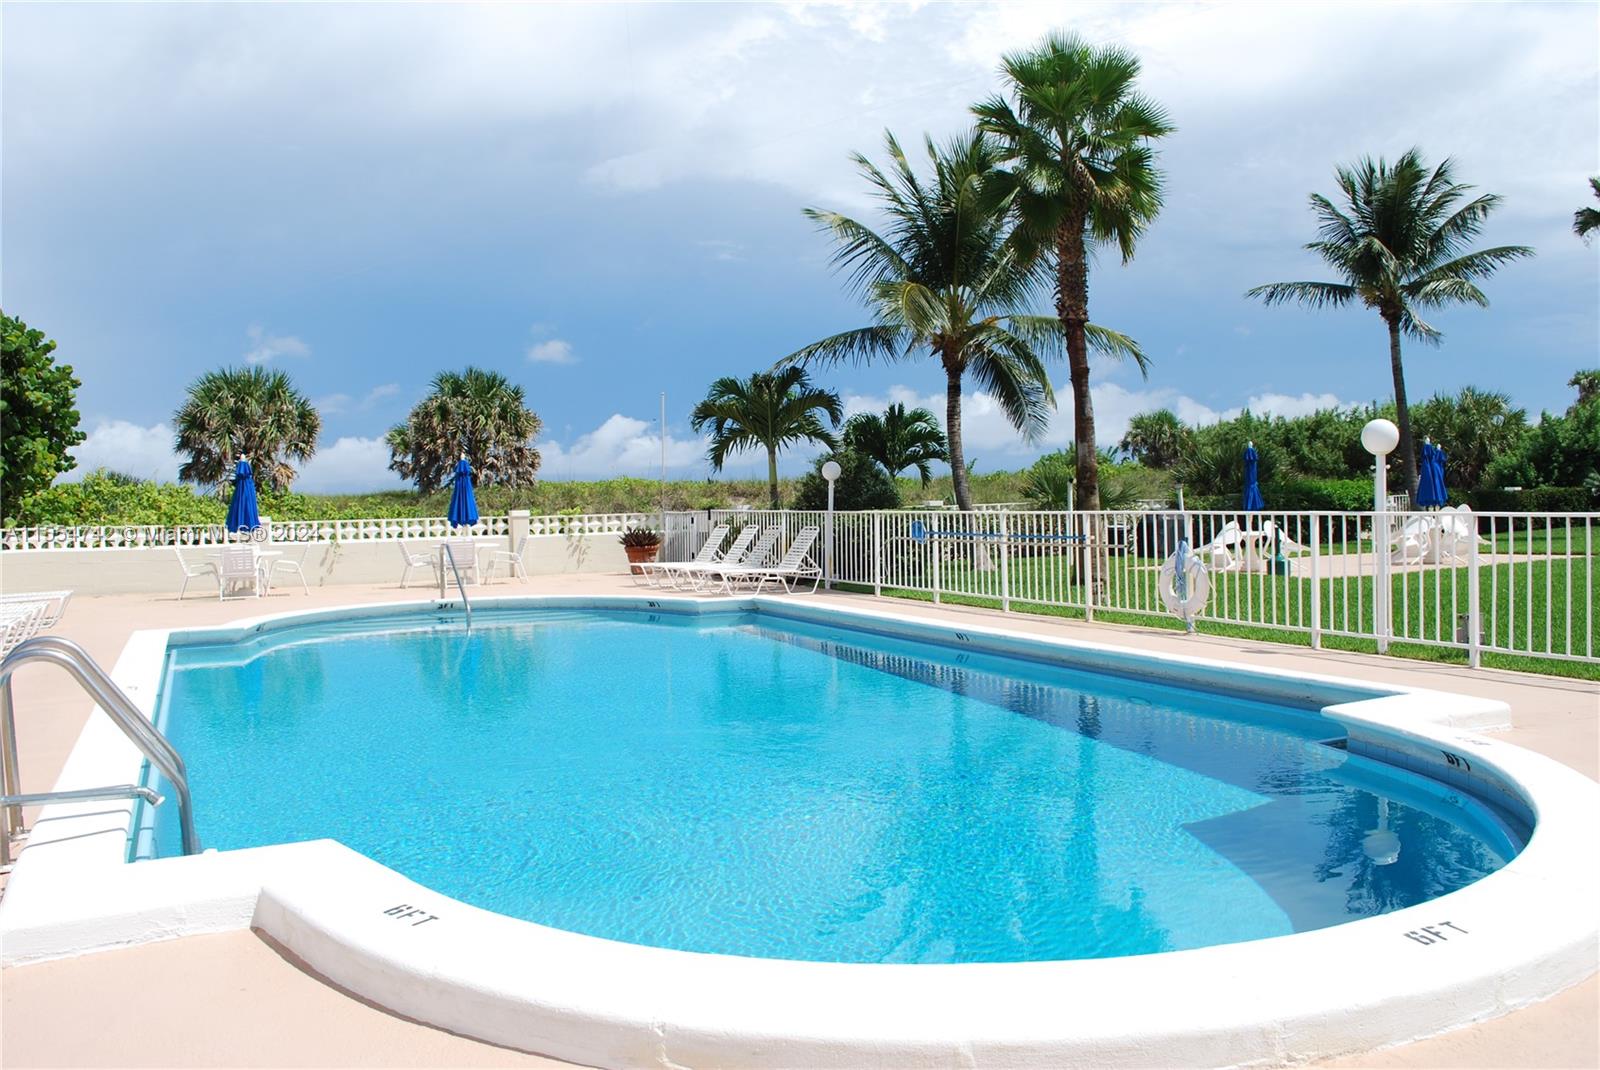 Rental Property at 125 Ocean Ave 214, Palm Beach Shores, Palm Beach County, Florida - Bedrooms: 1 
Bathrooms: 2  - $2,100 MO.